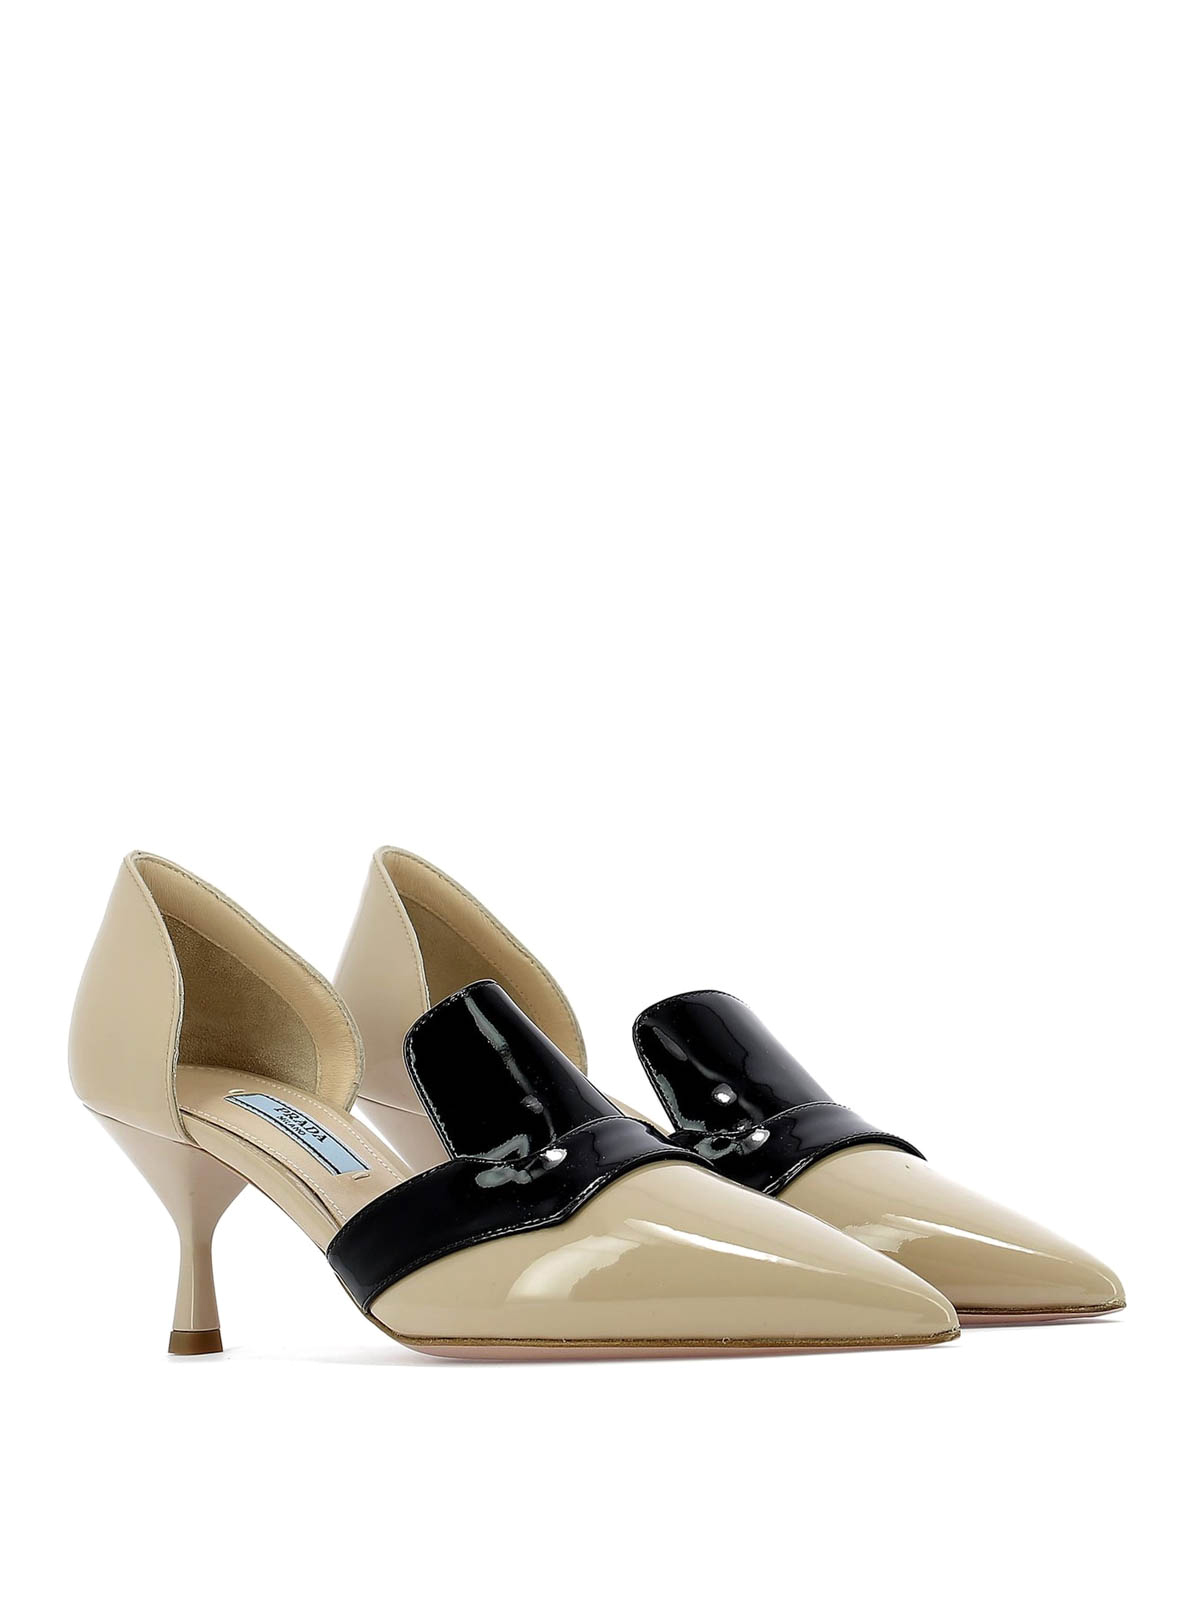 Court shoes Prada - Beige and black patent leather medium pumps -  1I232LZAZF0MJV